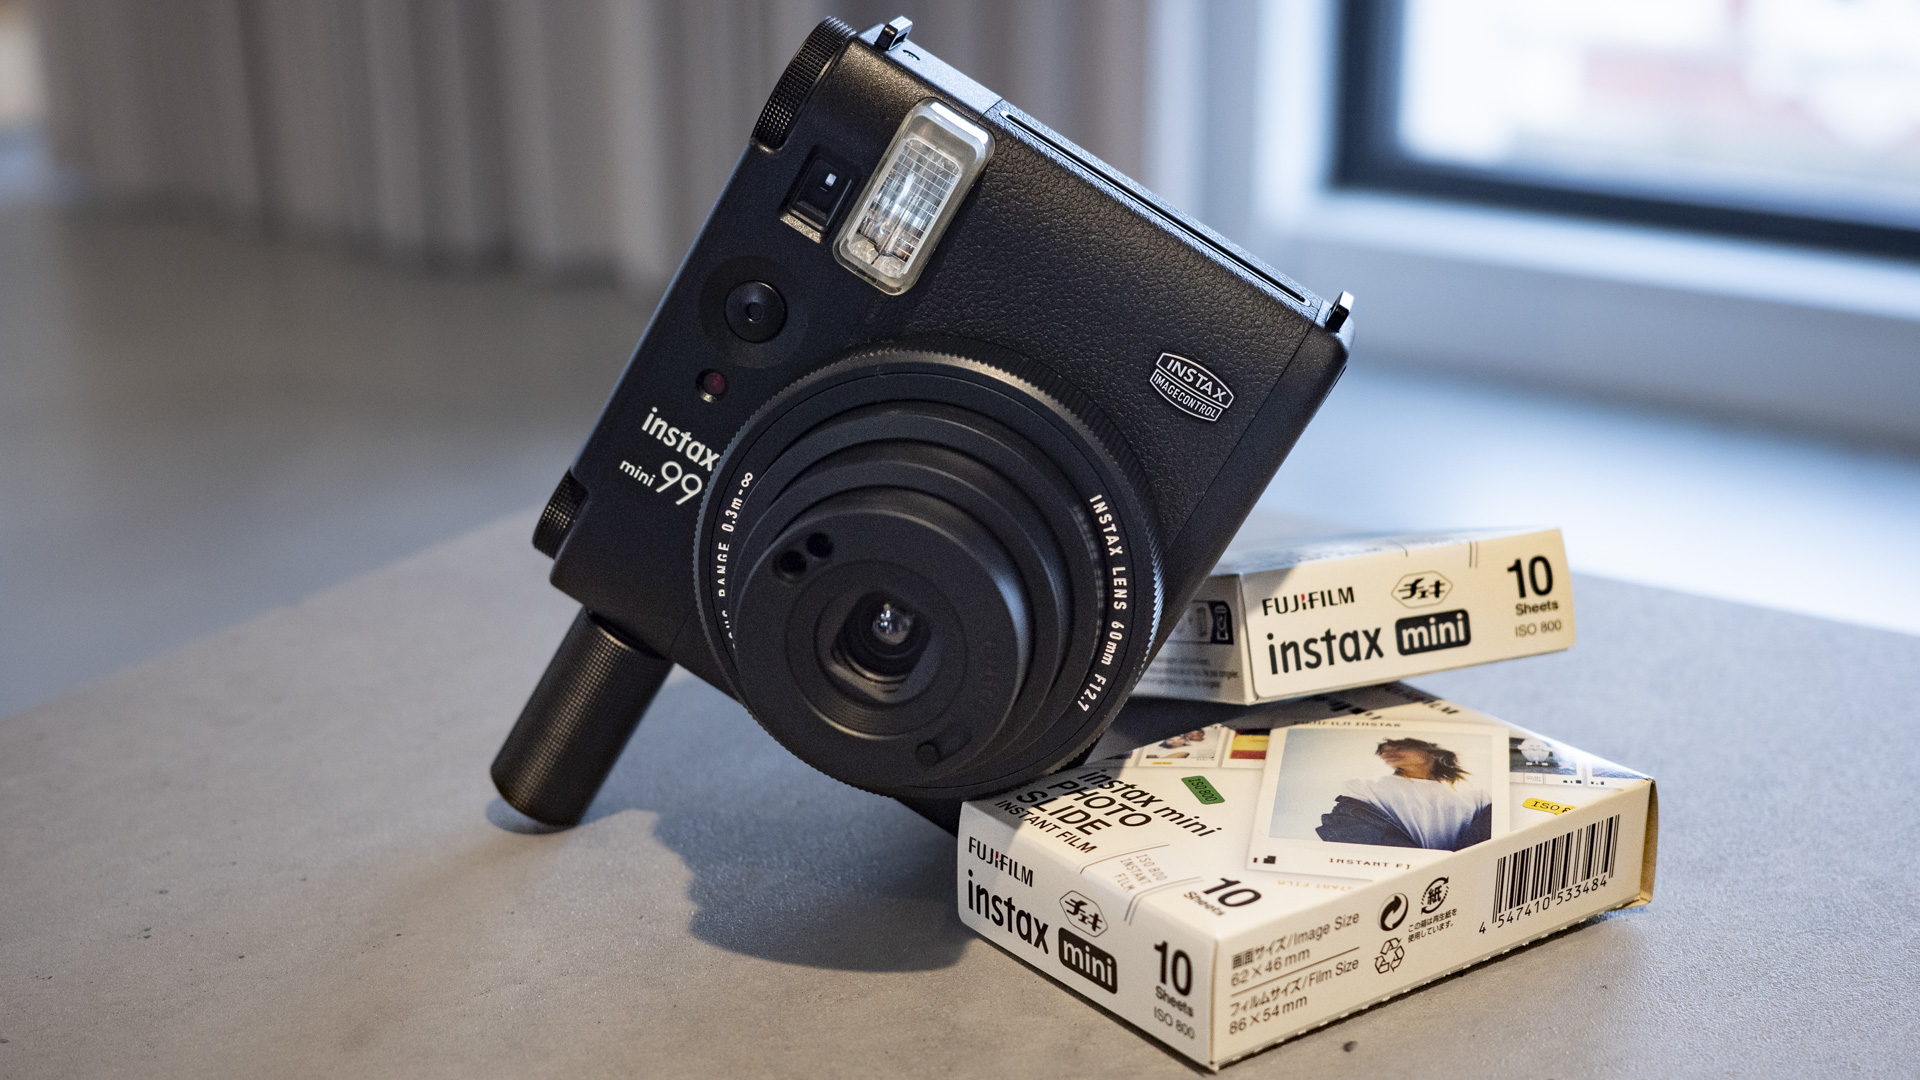 Fujifilm Instax Mini 99 camera